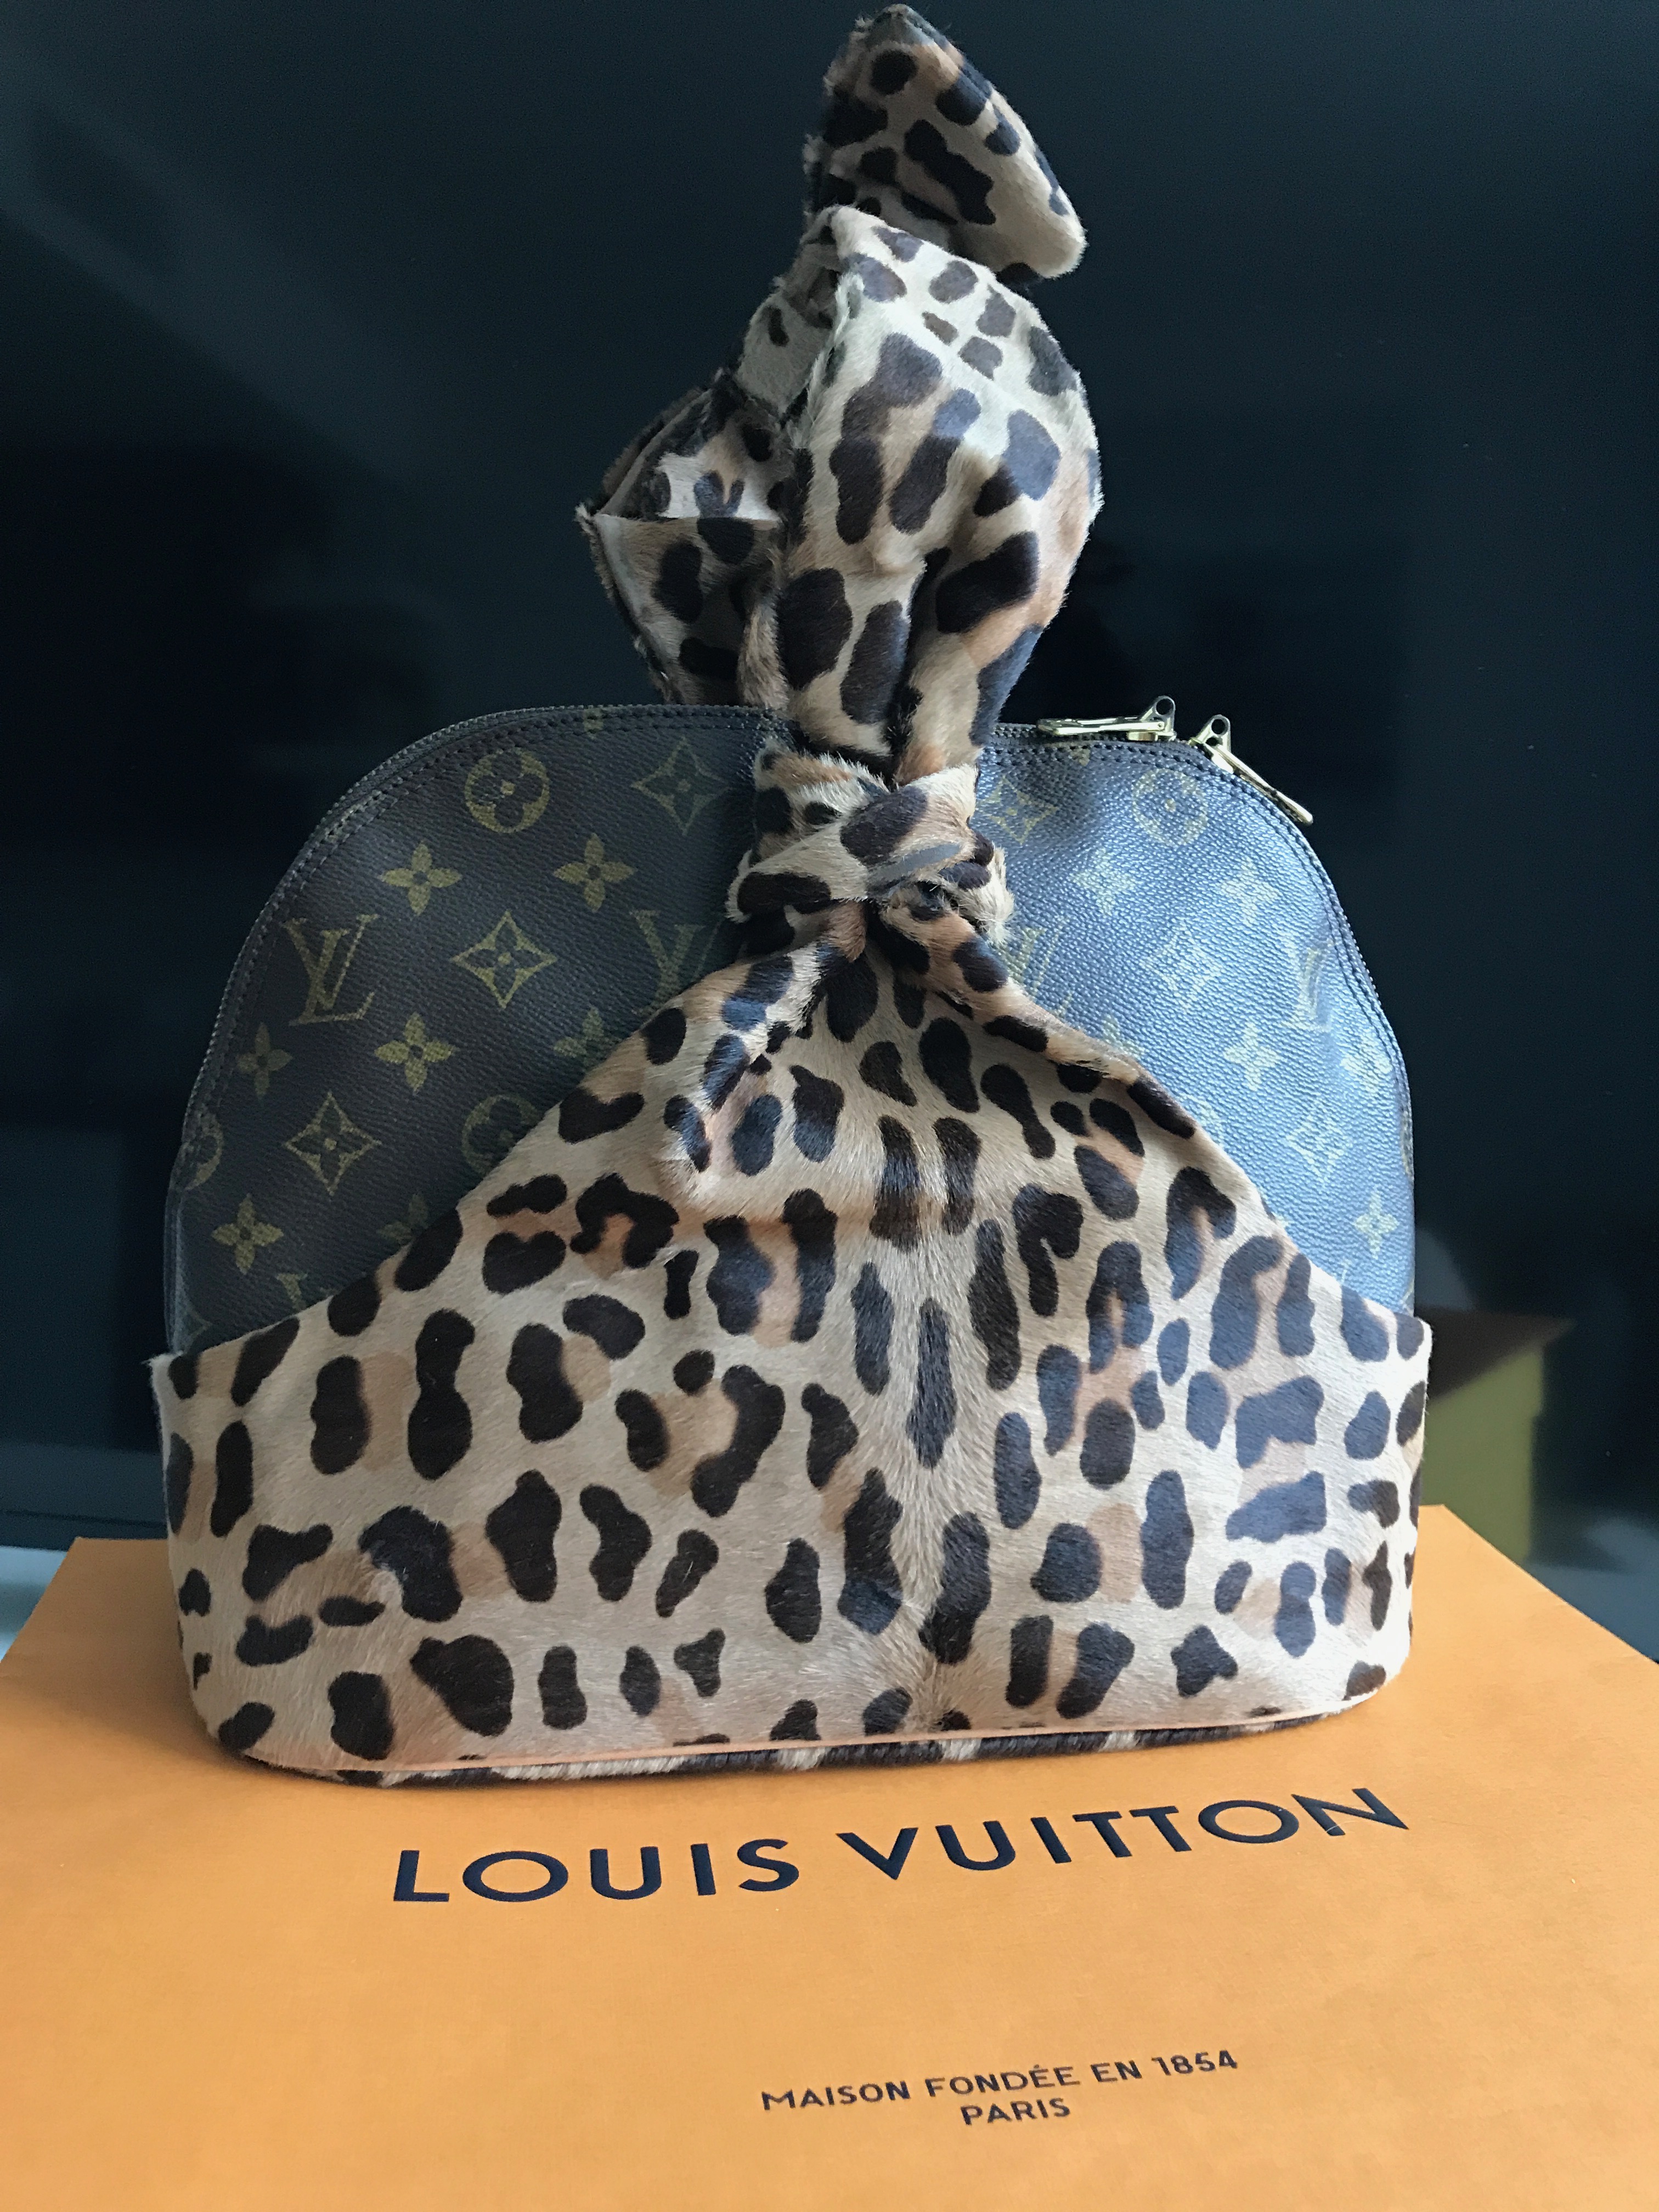 Louis Vuitton x Azzedine Alaia 'Centenaire' Leopard Alma Bag